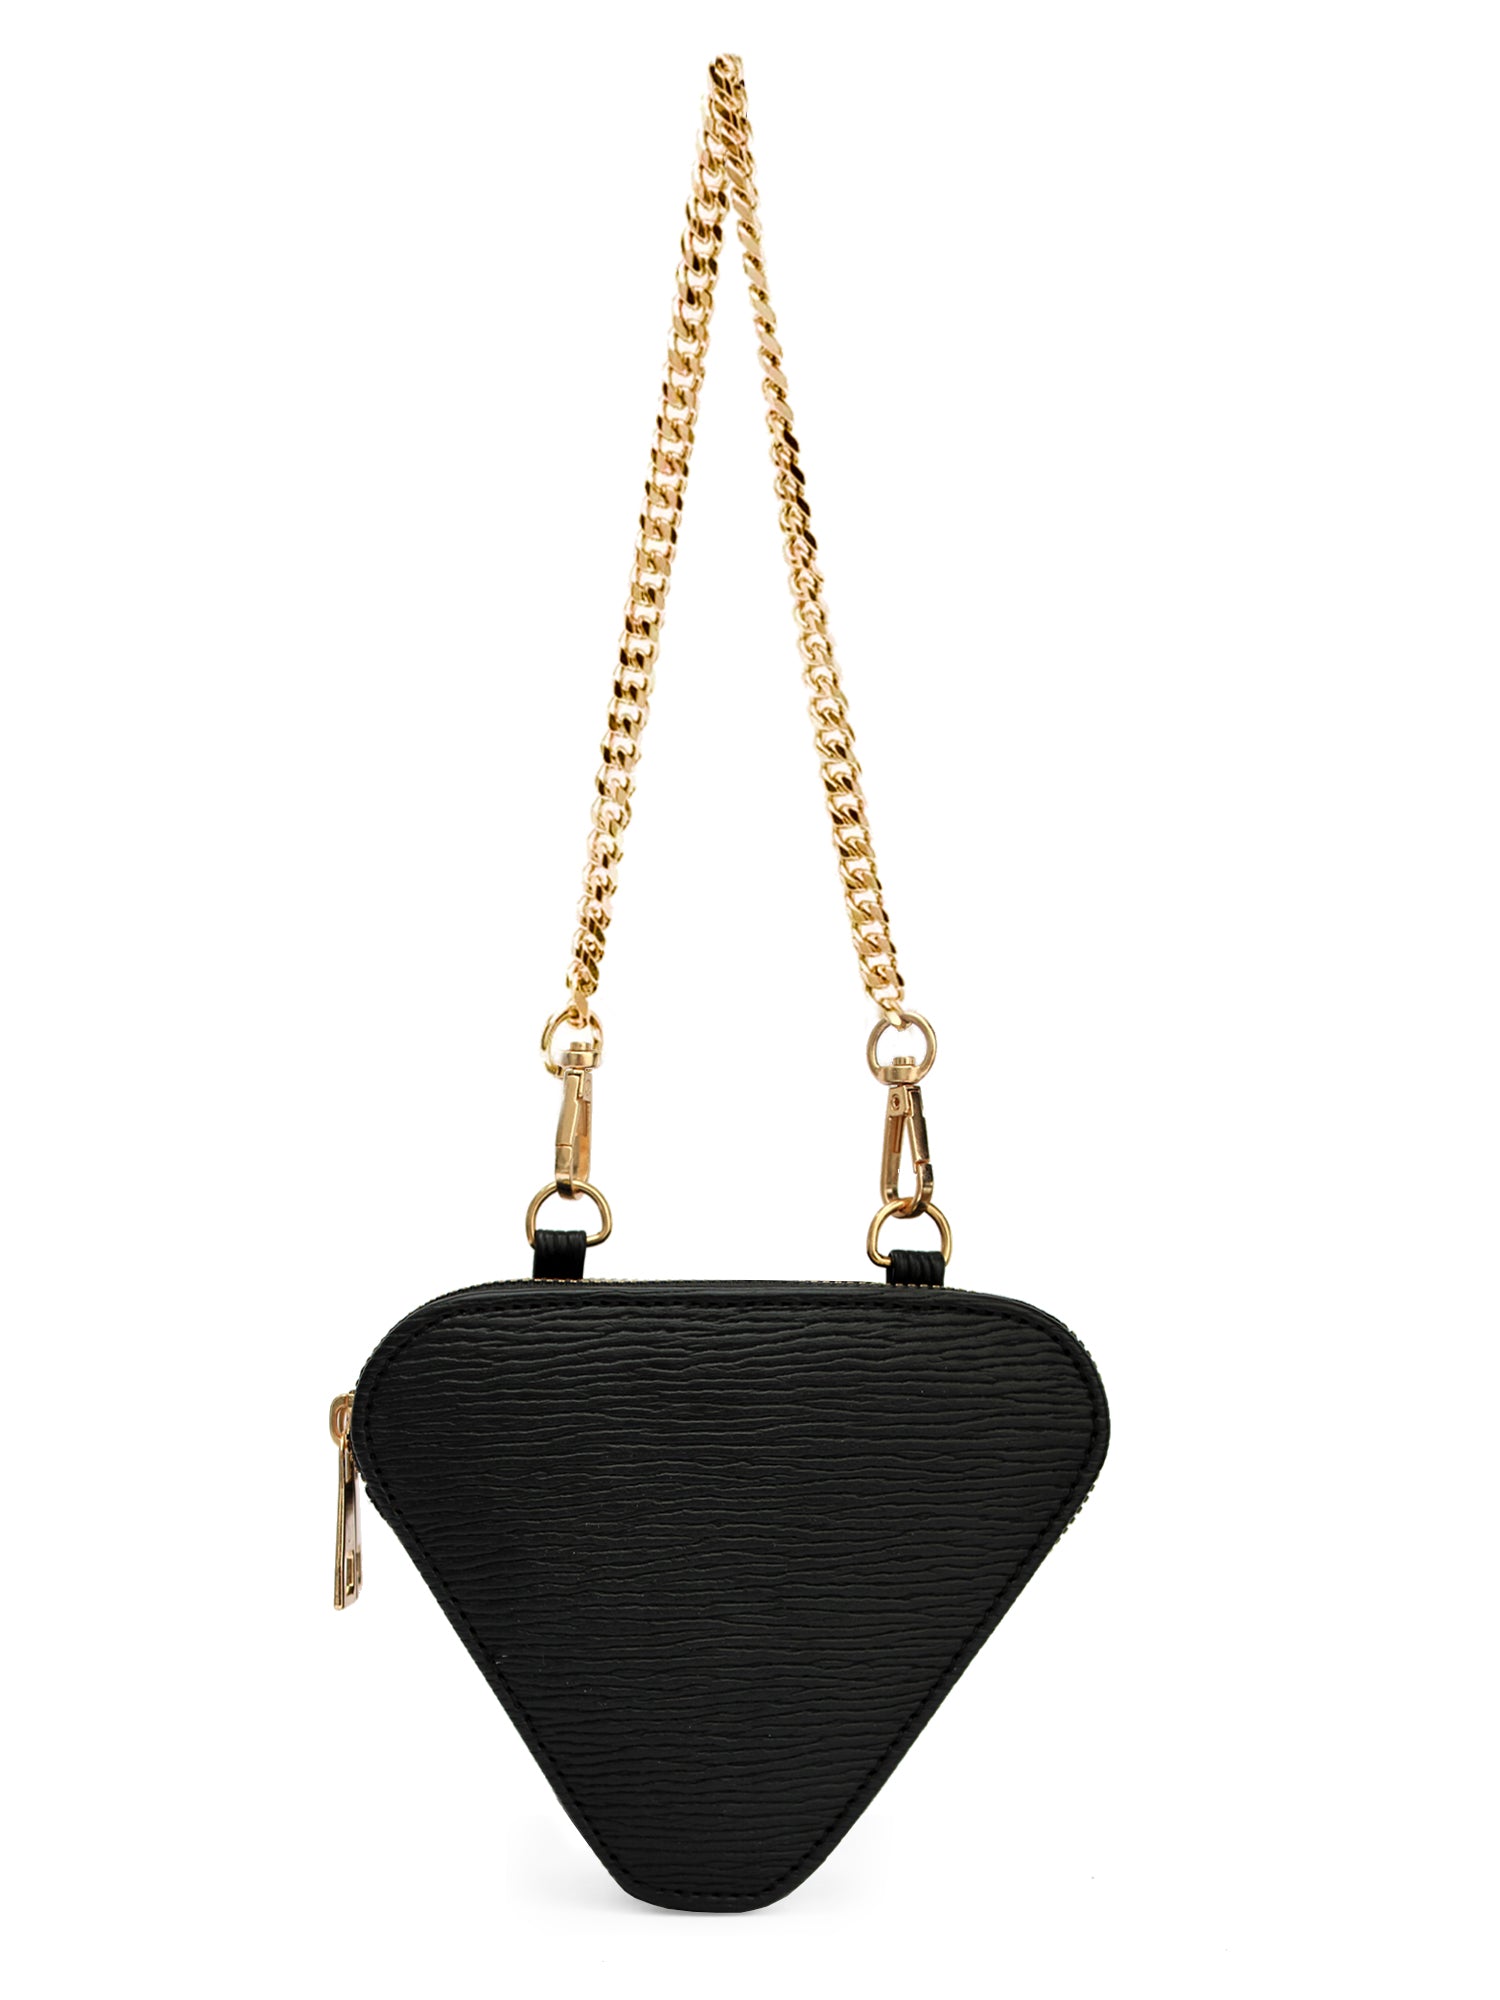 Vivienne Westwood Small Purse with Chain Bag Leather Black Mini Bag ORB  Logo | eBay